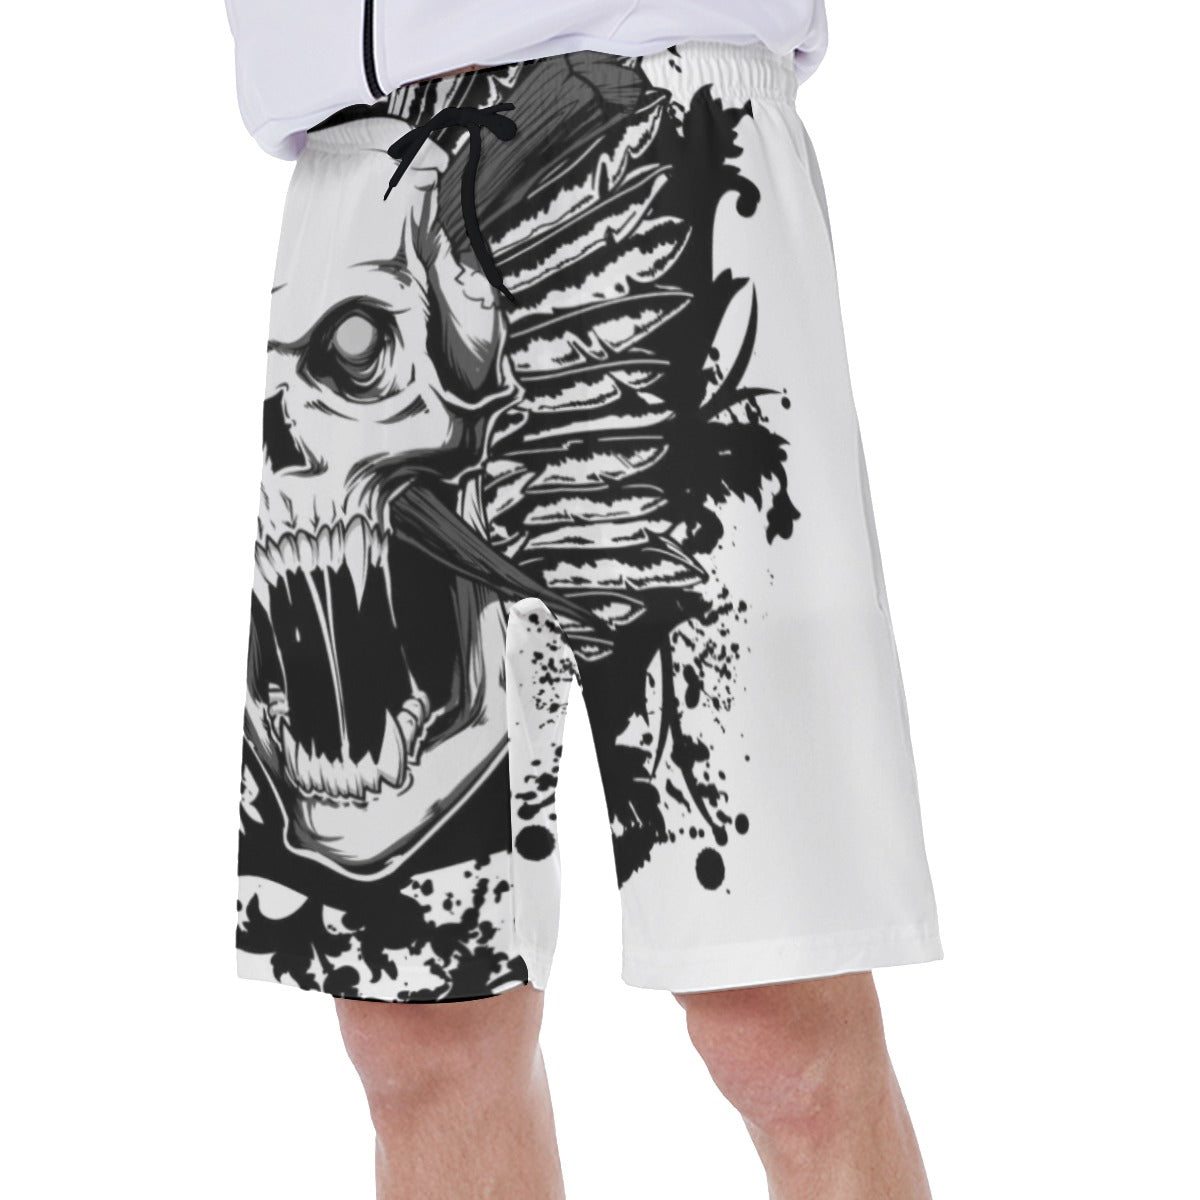 Gothic skull Men's Beach Shorts